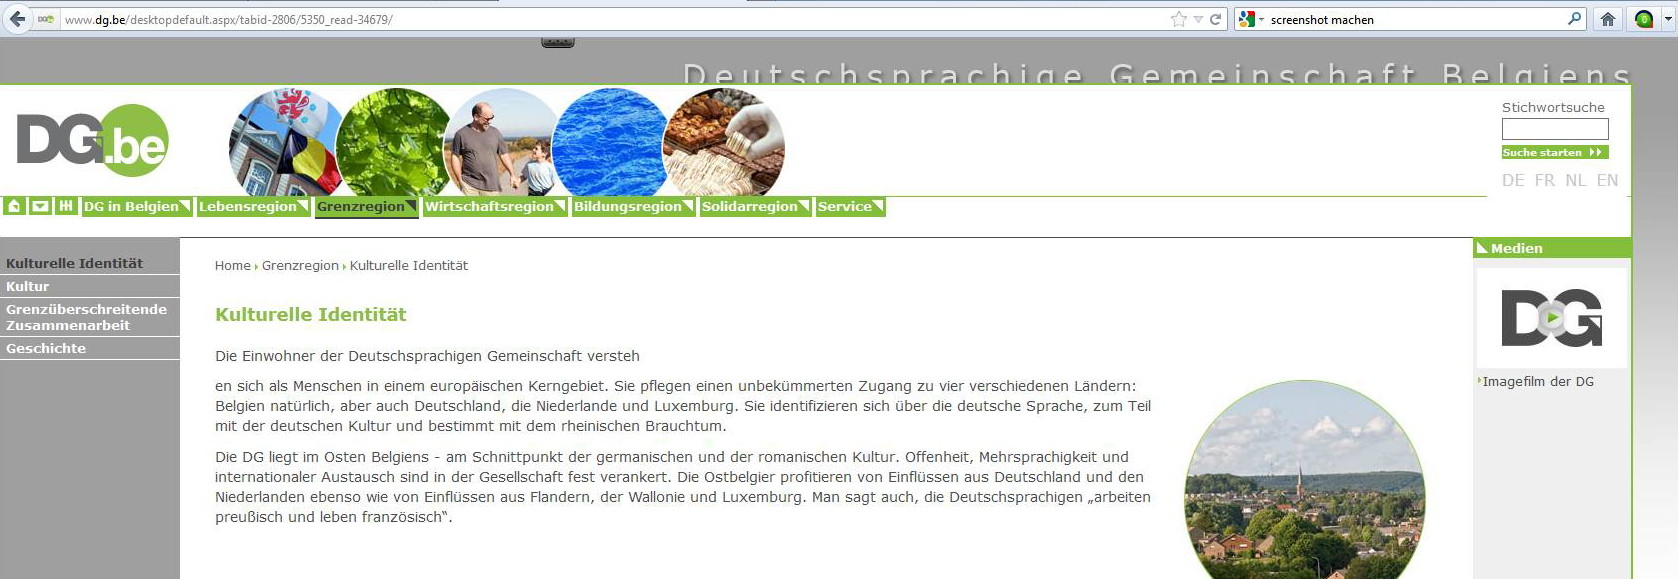 Screenshot DG.be: Kulturelle Identität